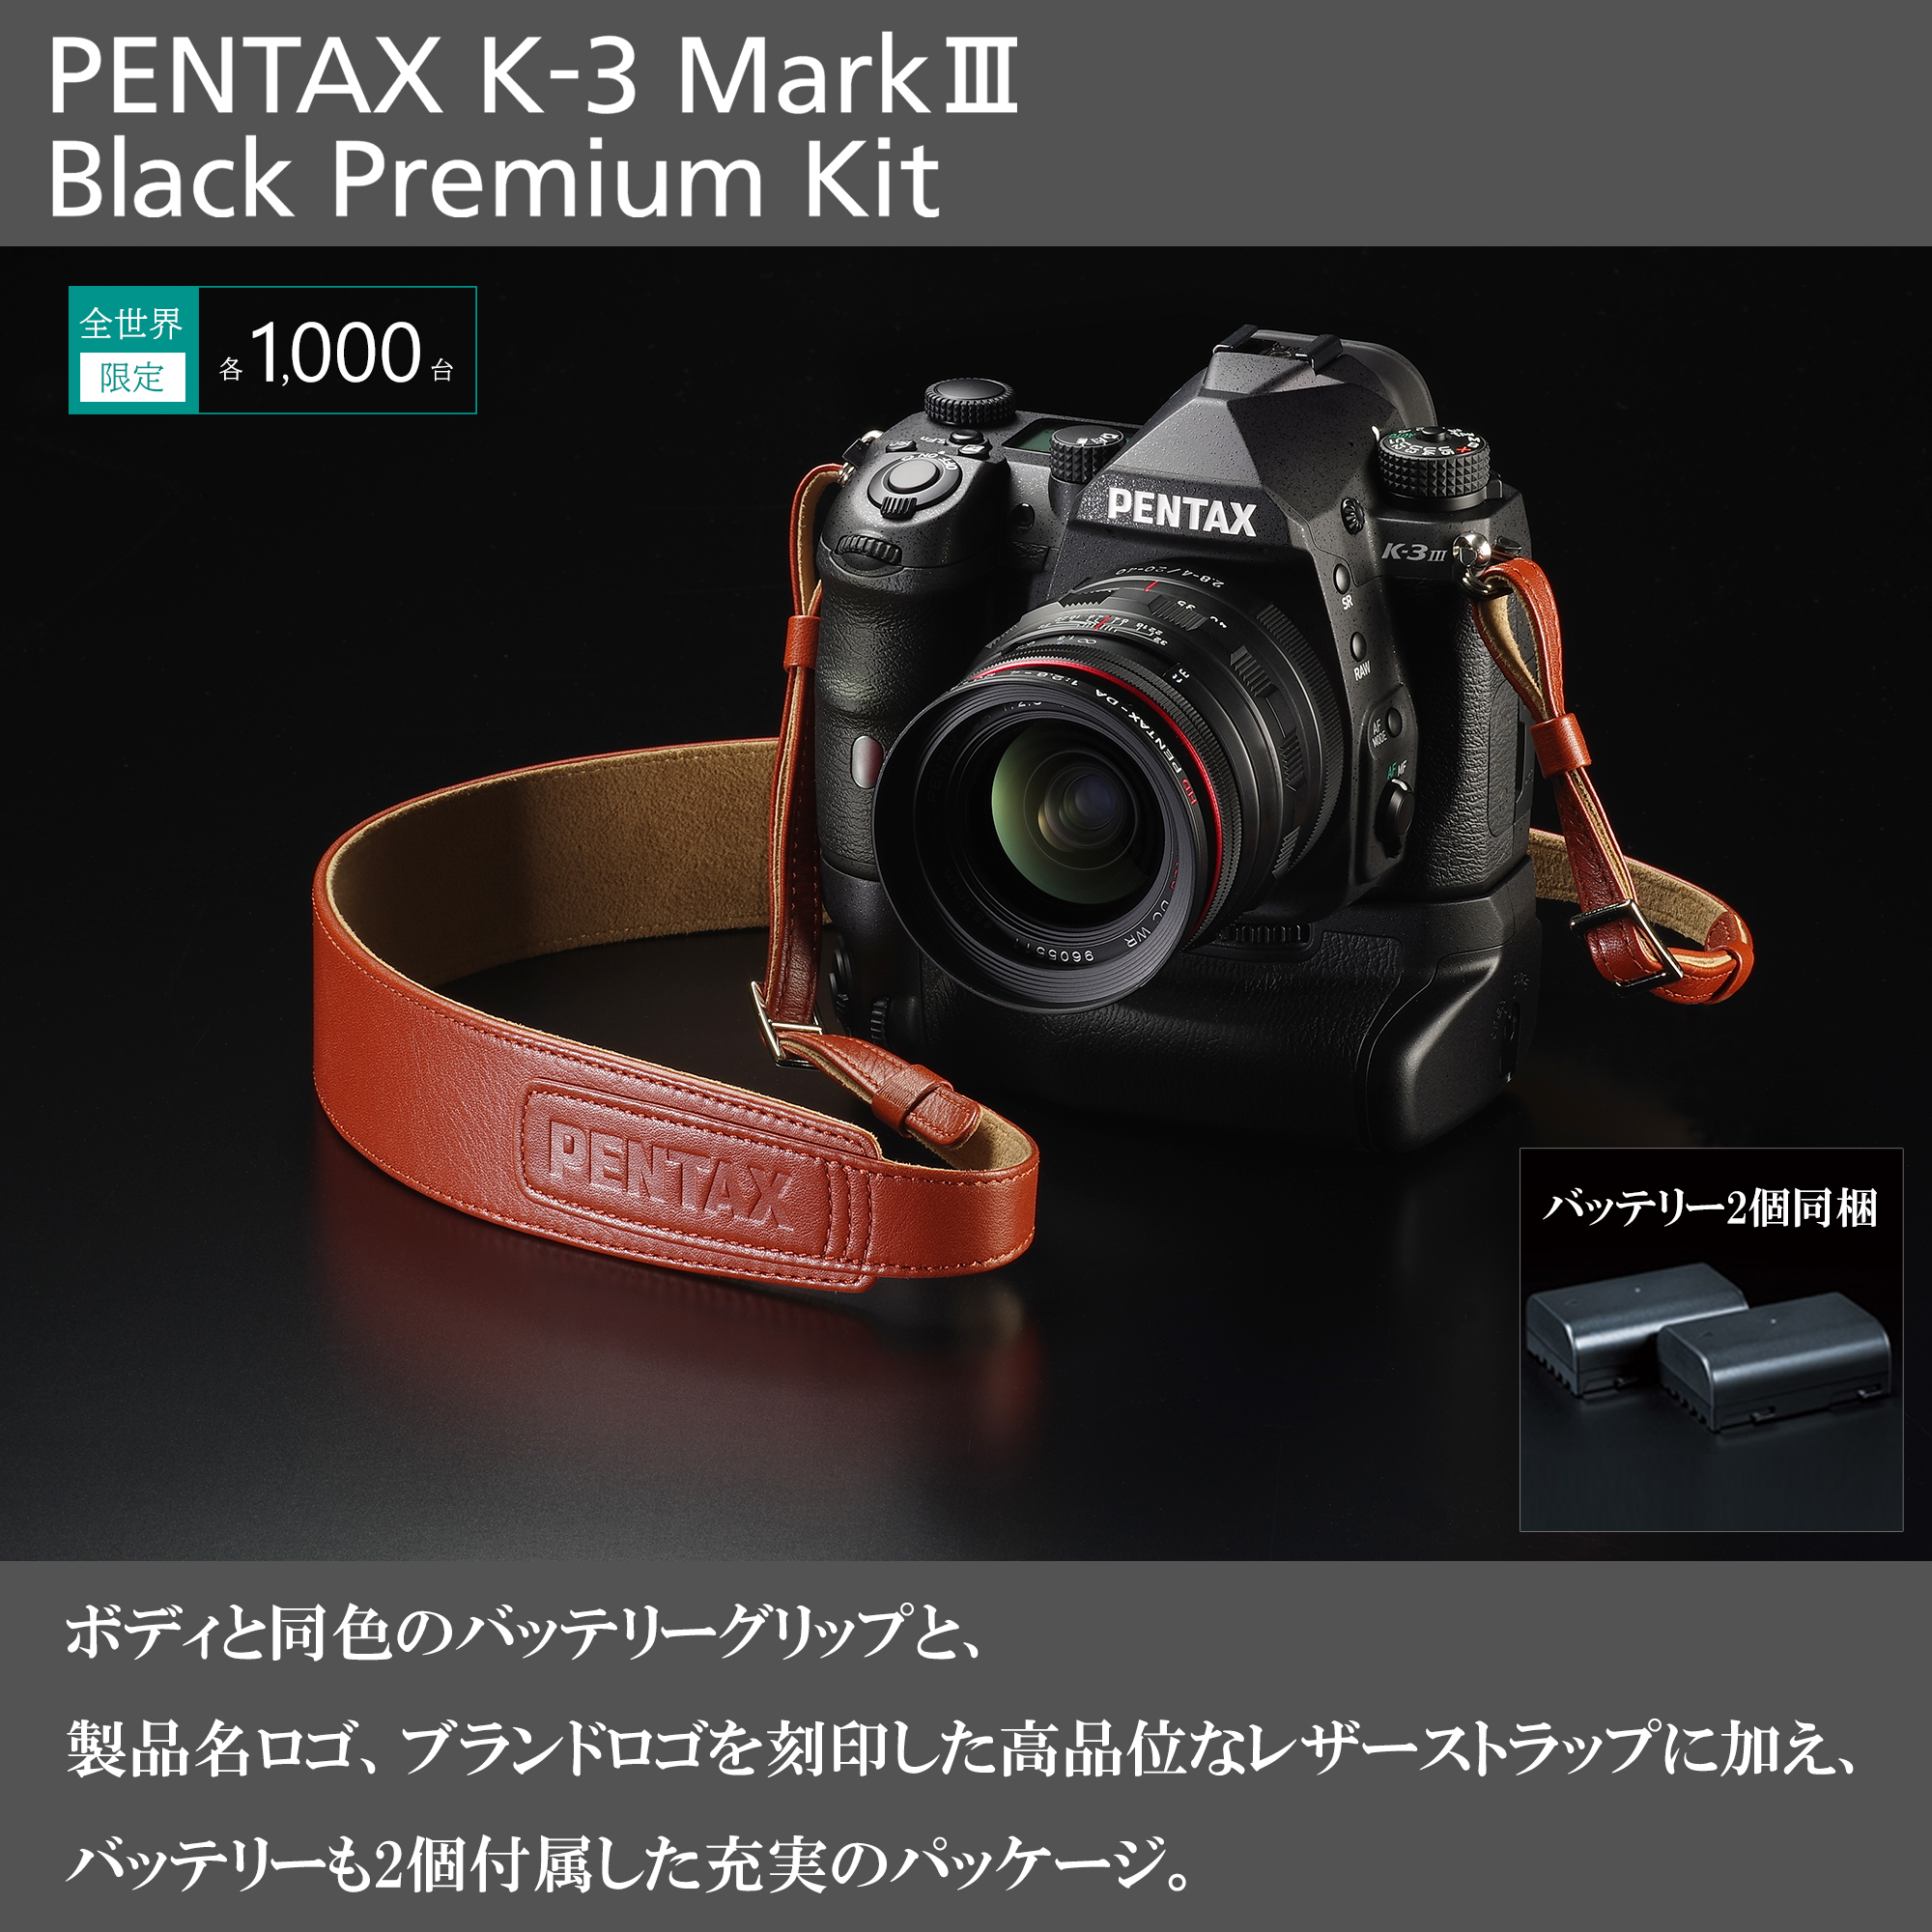 yViz(y^bNX) PENTAX K-3 Mark III Premium Lbg ubN